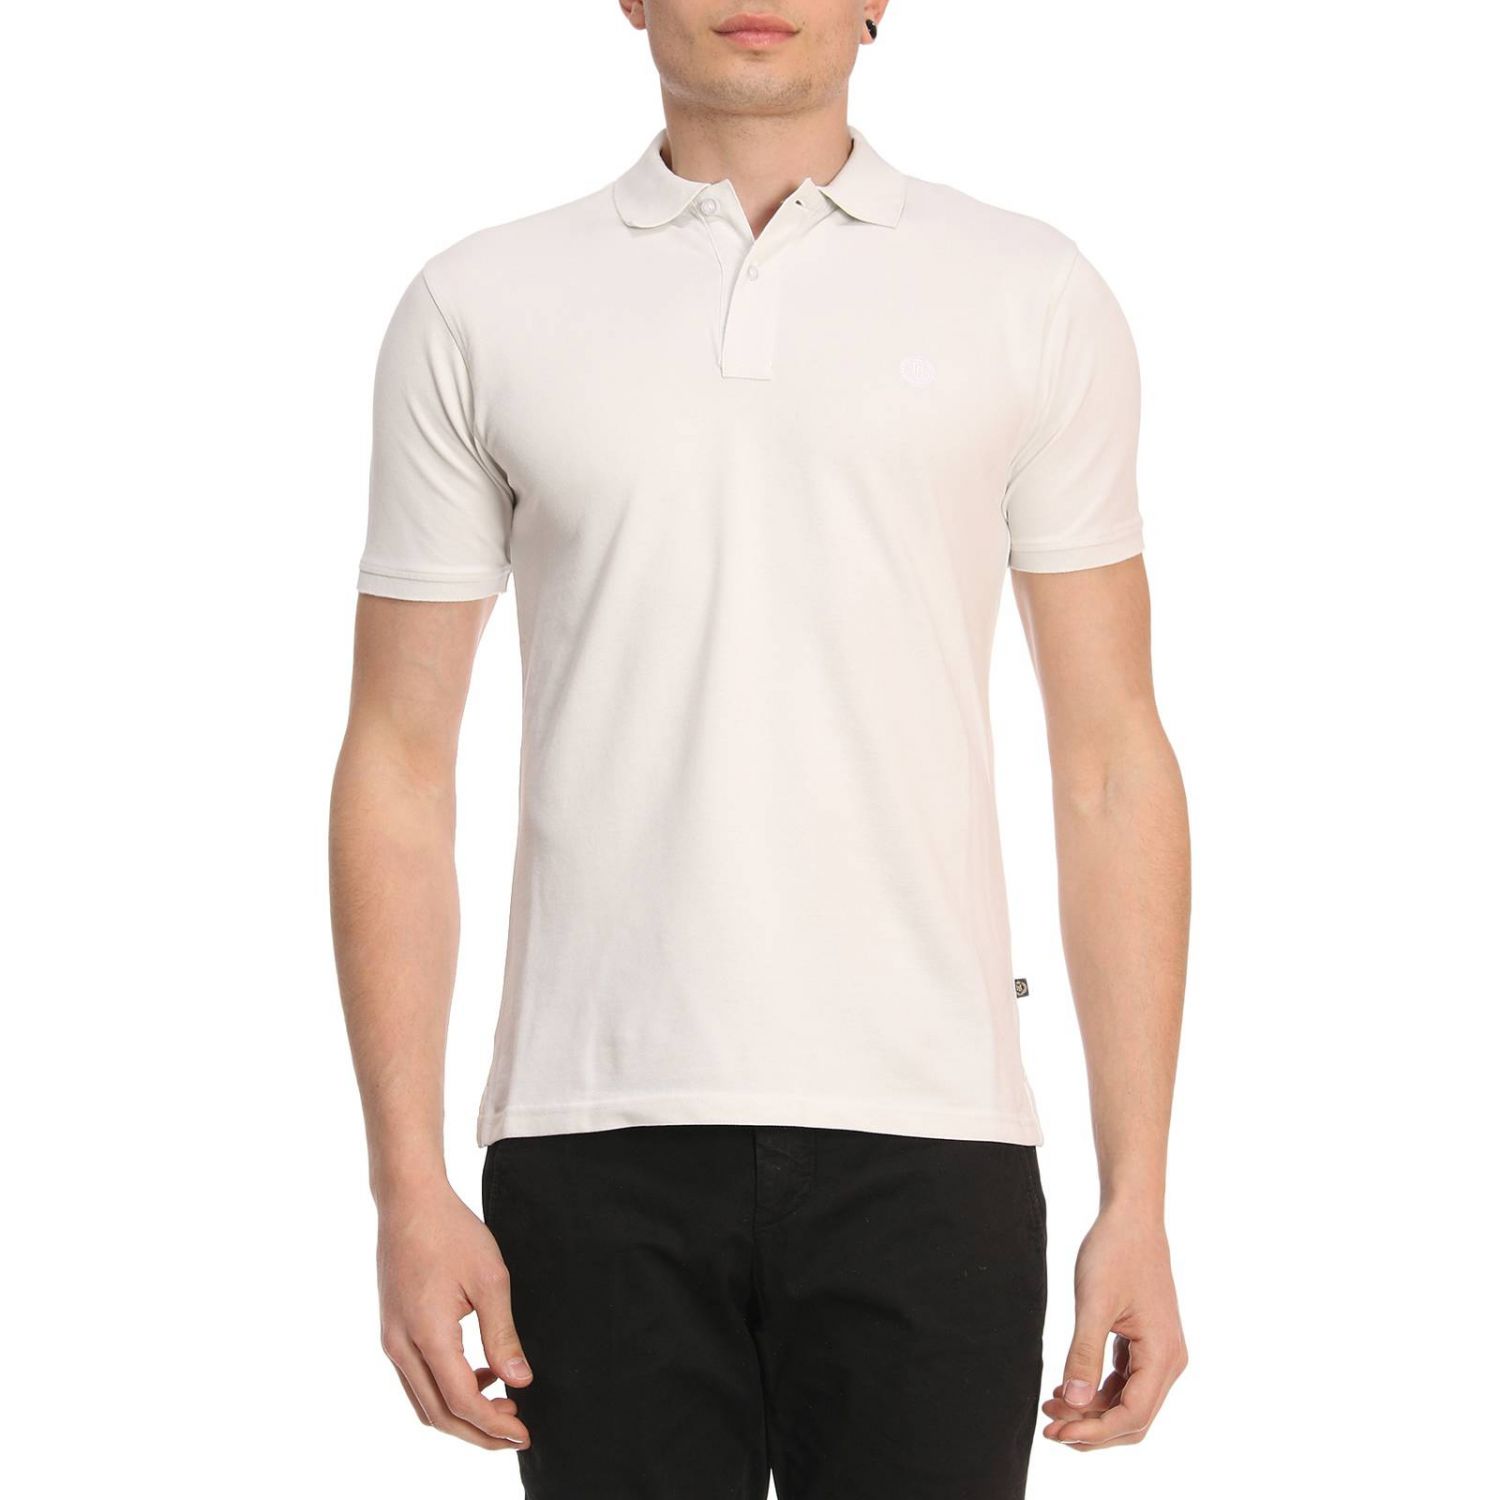 Henri Lloyd Outlet: T-shirt men | T-Shirt Henri Lloyd Men White | T ...